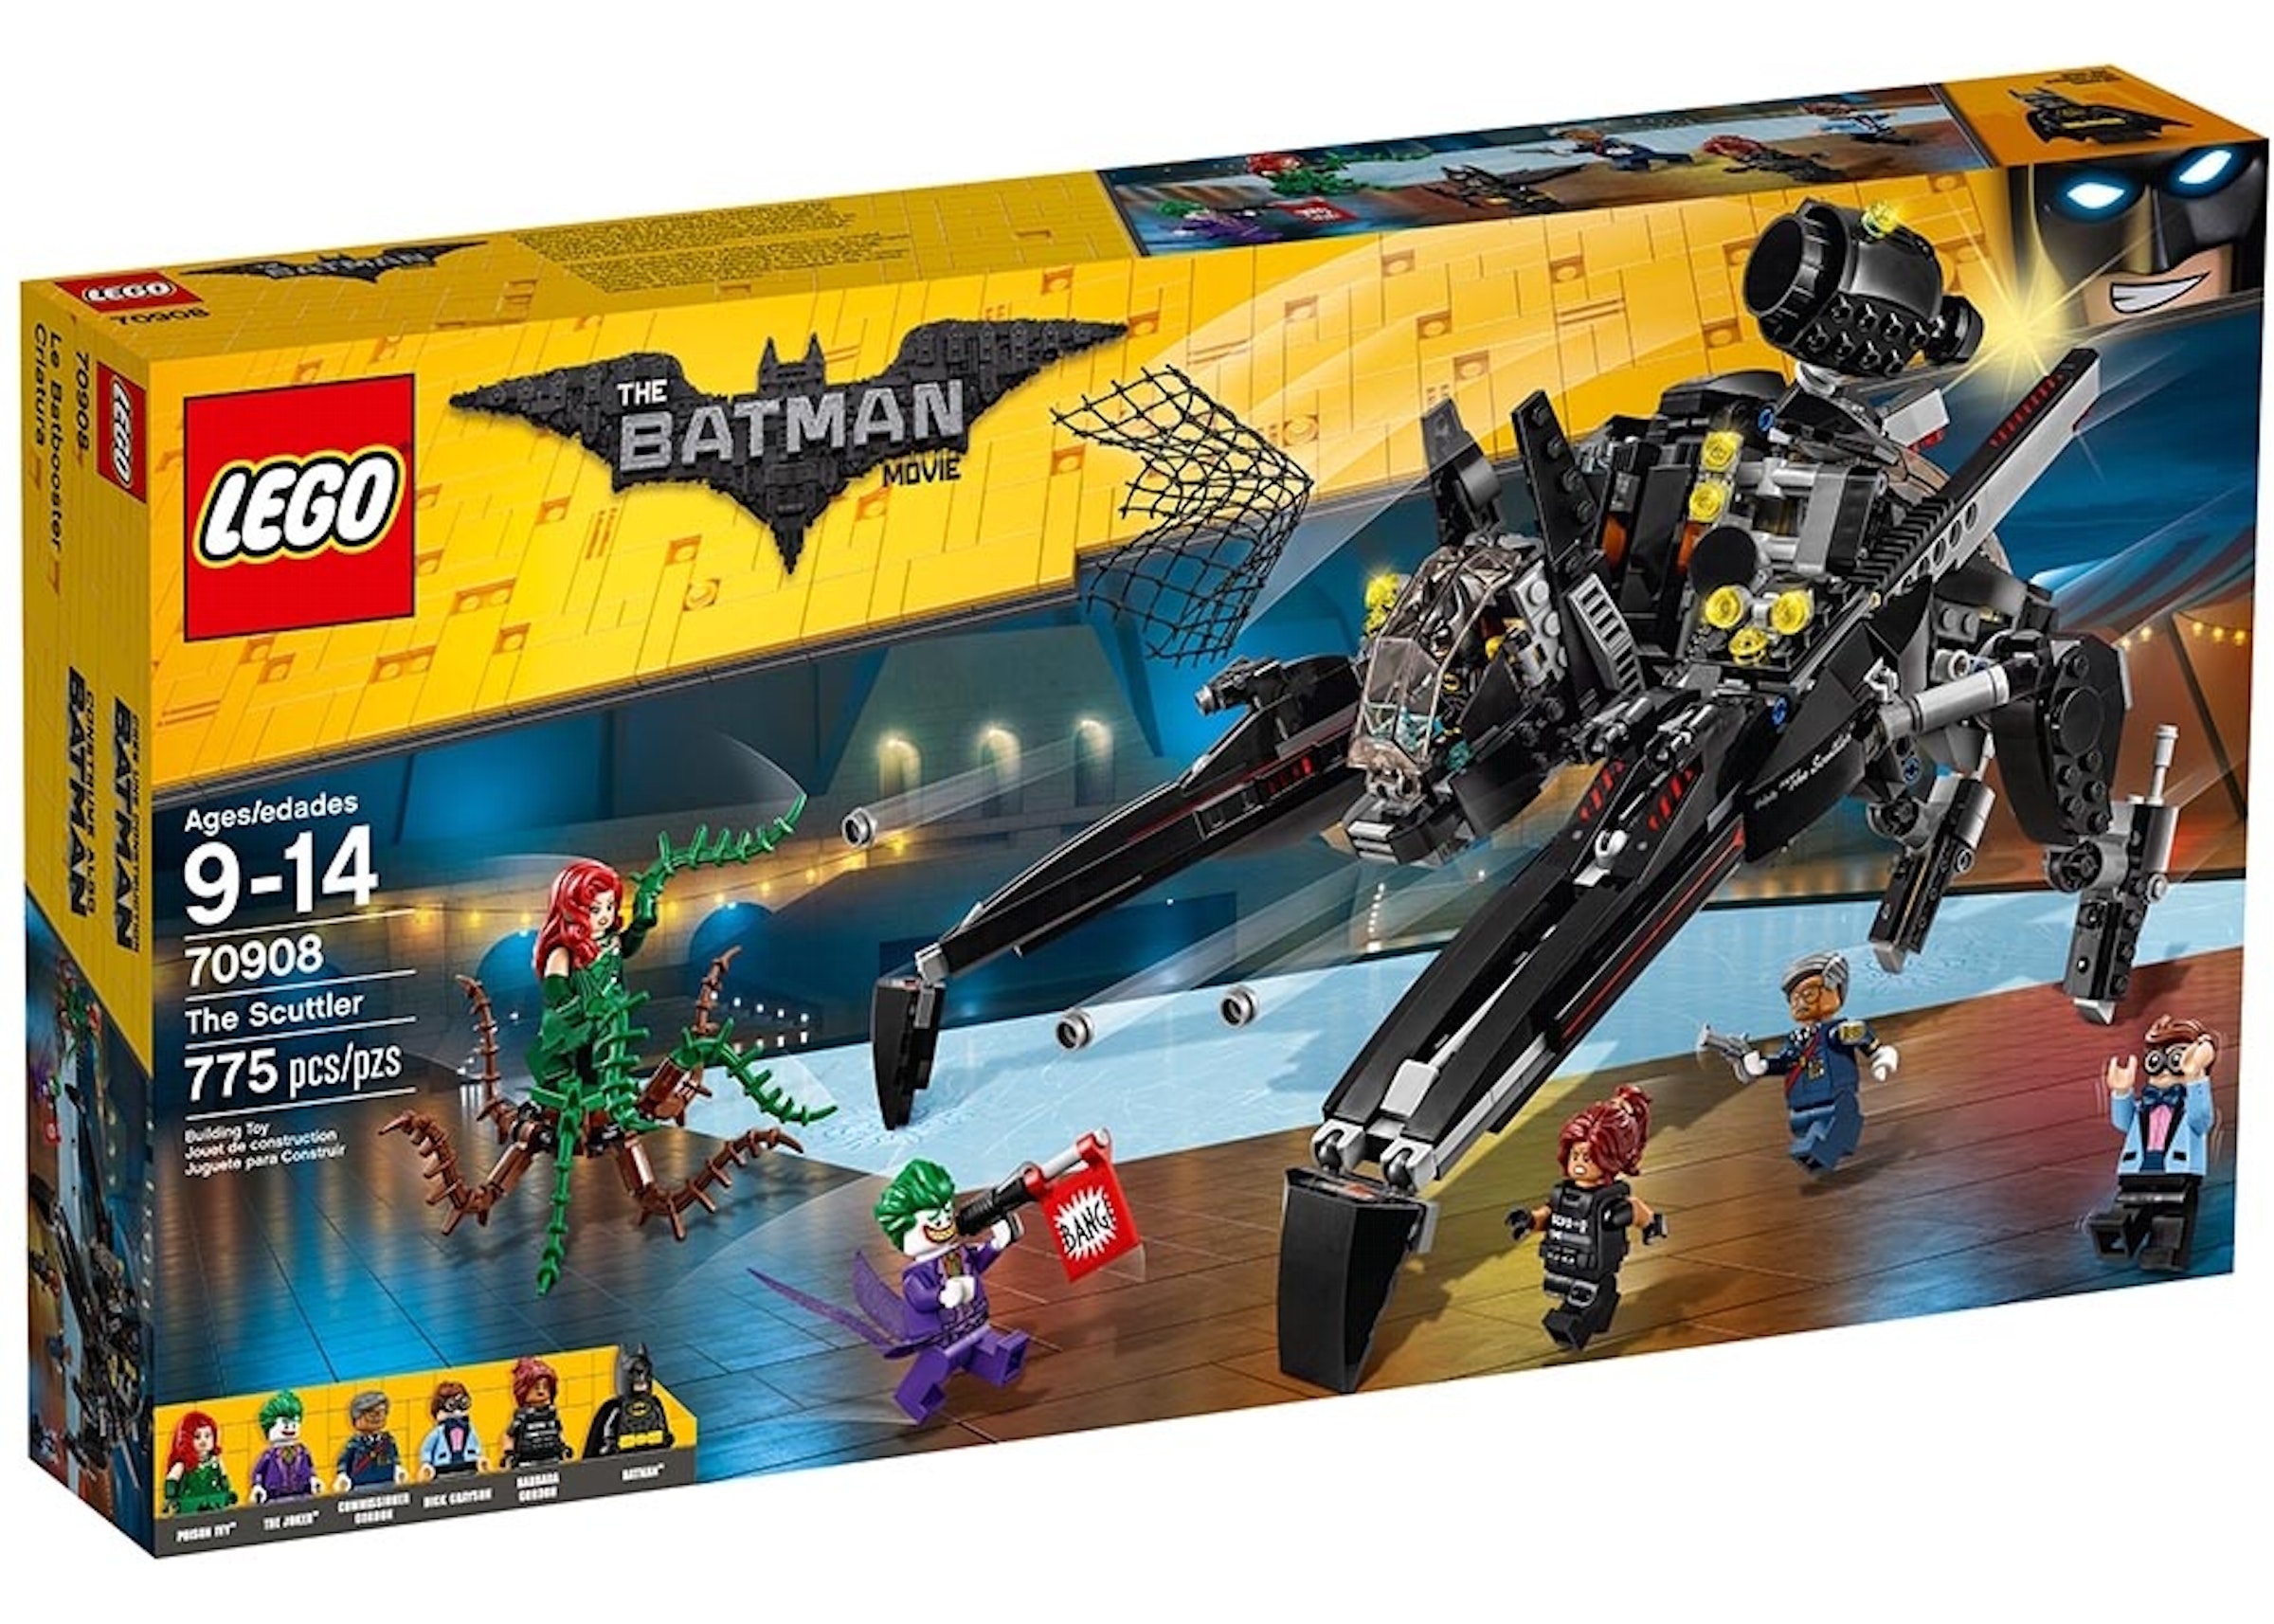 lustre dagbog Socialisme LEGO The LEGO Batman Movie The Scuttler Set 70908 - US